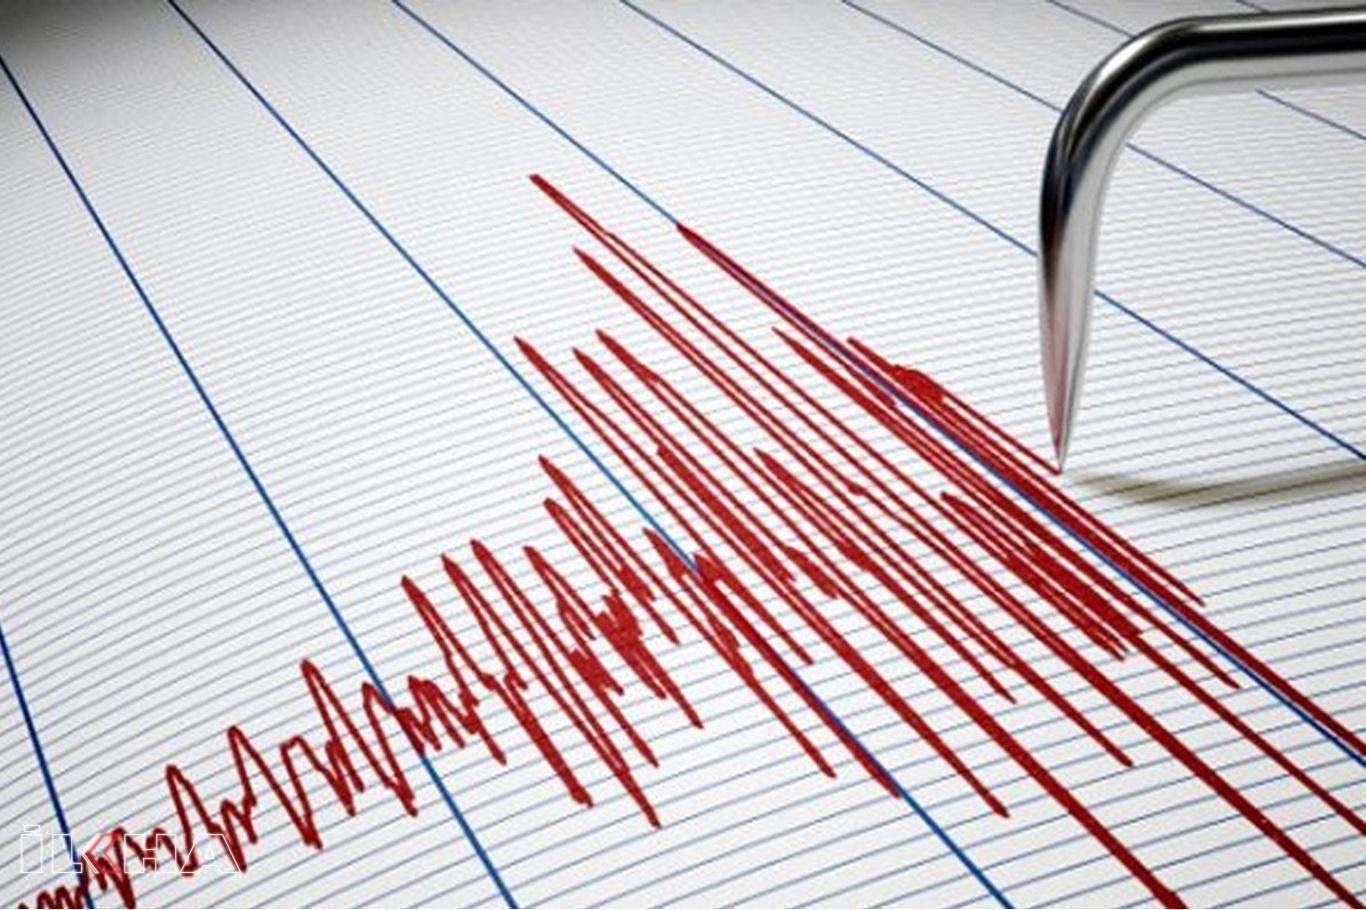 A 4.3 magnitude earthquake occurs in Mediterranean Sea